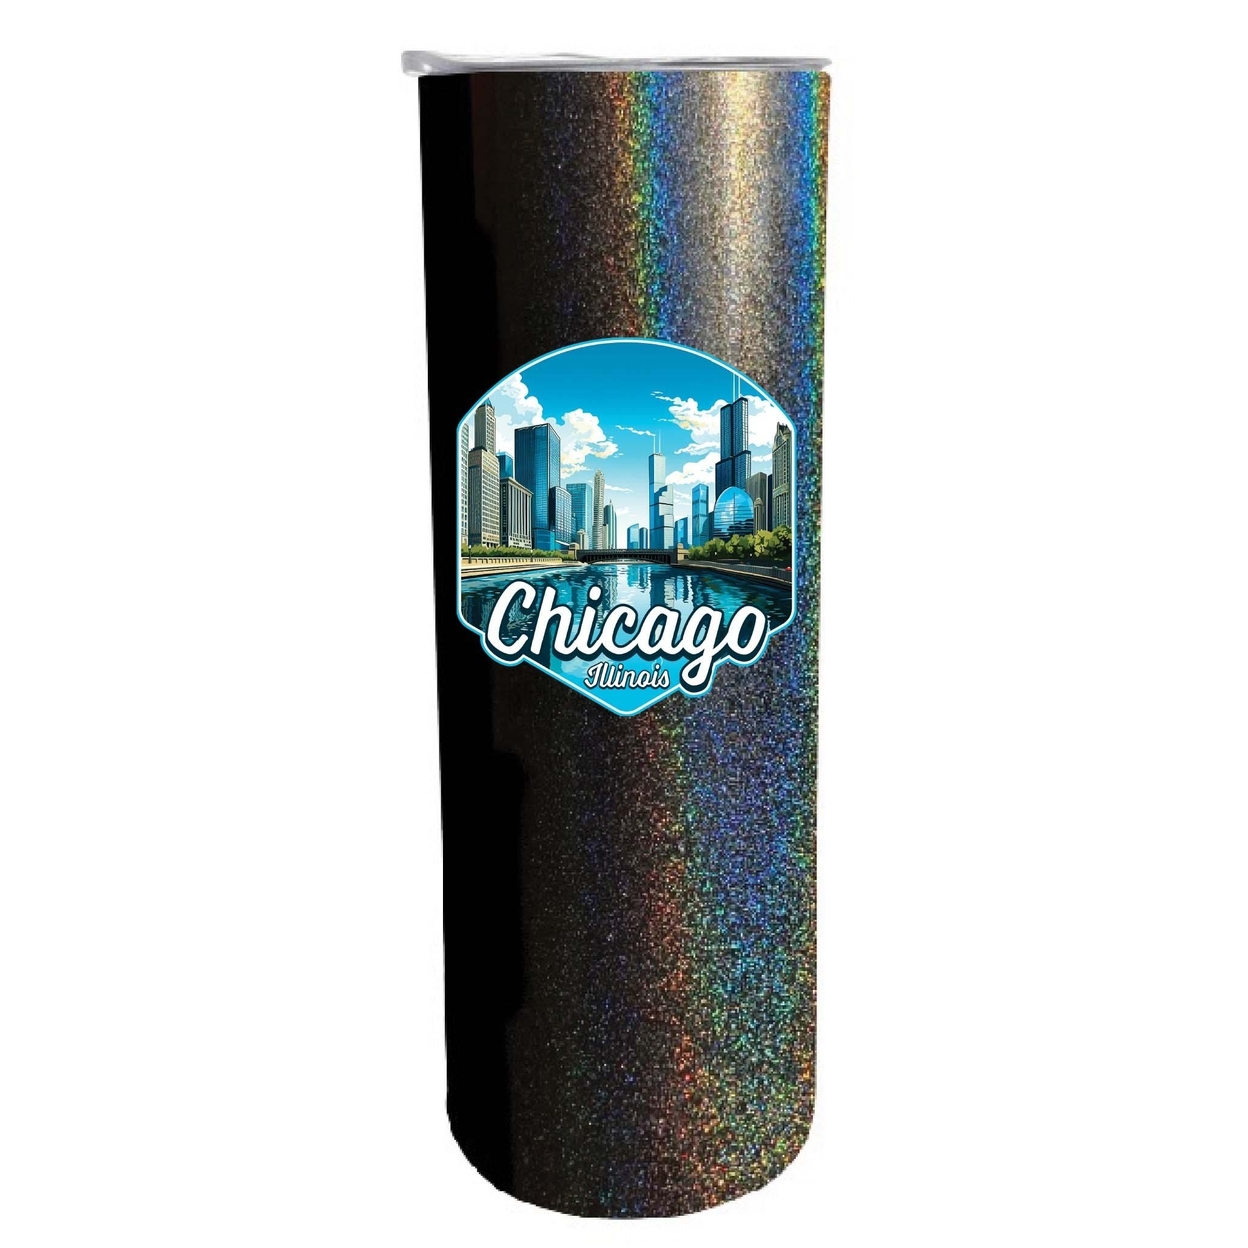 Chicago Illinois A Souvenir 20 Oz Insulated Skinny Tumbler - Black Glitter,,Single